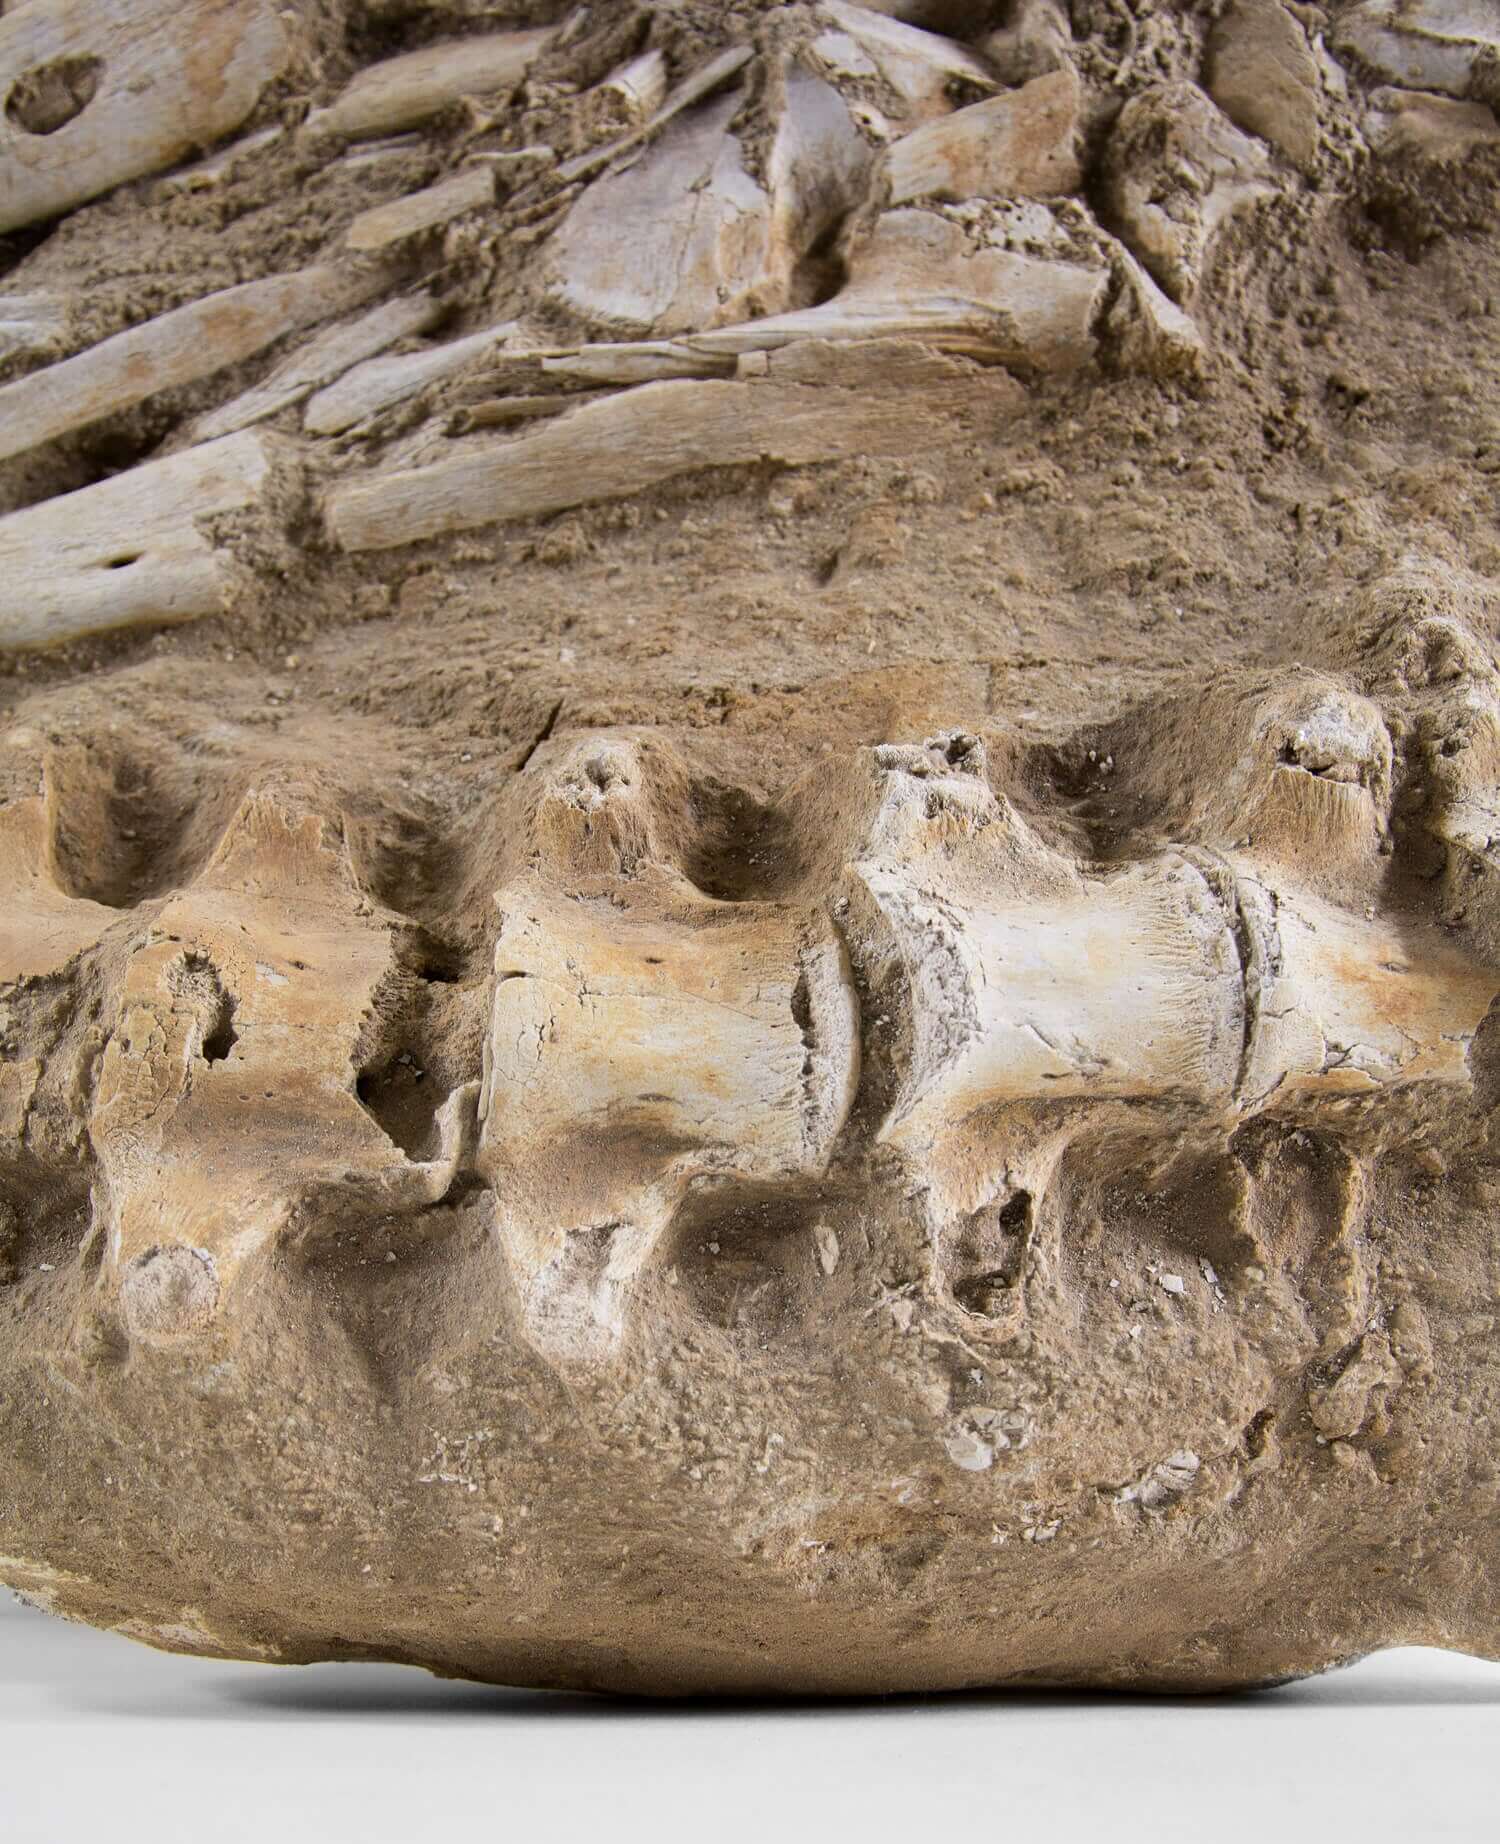 A stunning museum-standard rare fossil Halisaurus arambourgi mosasaurus jaw and vertebra for sale measuring 2.9 feet